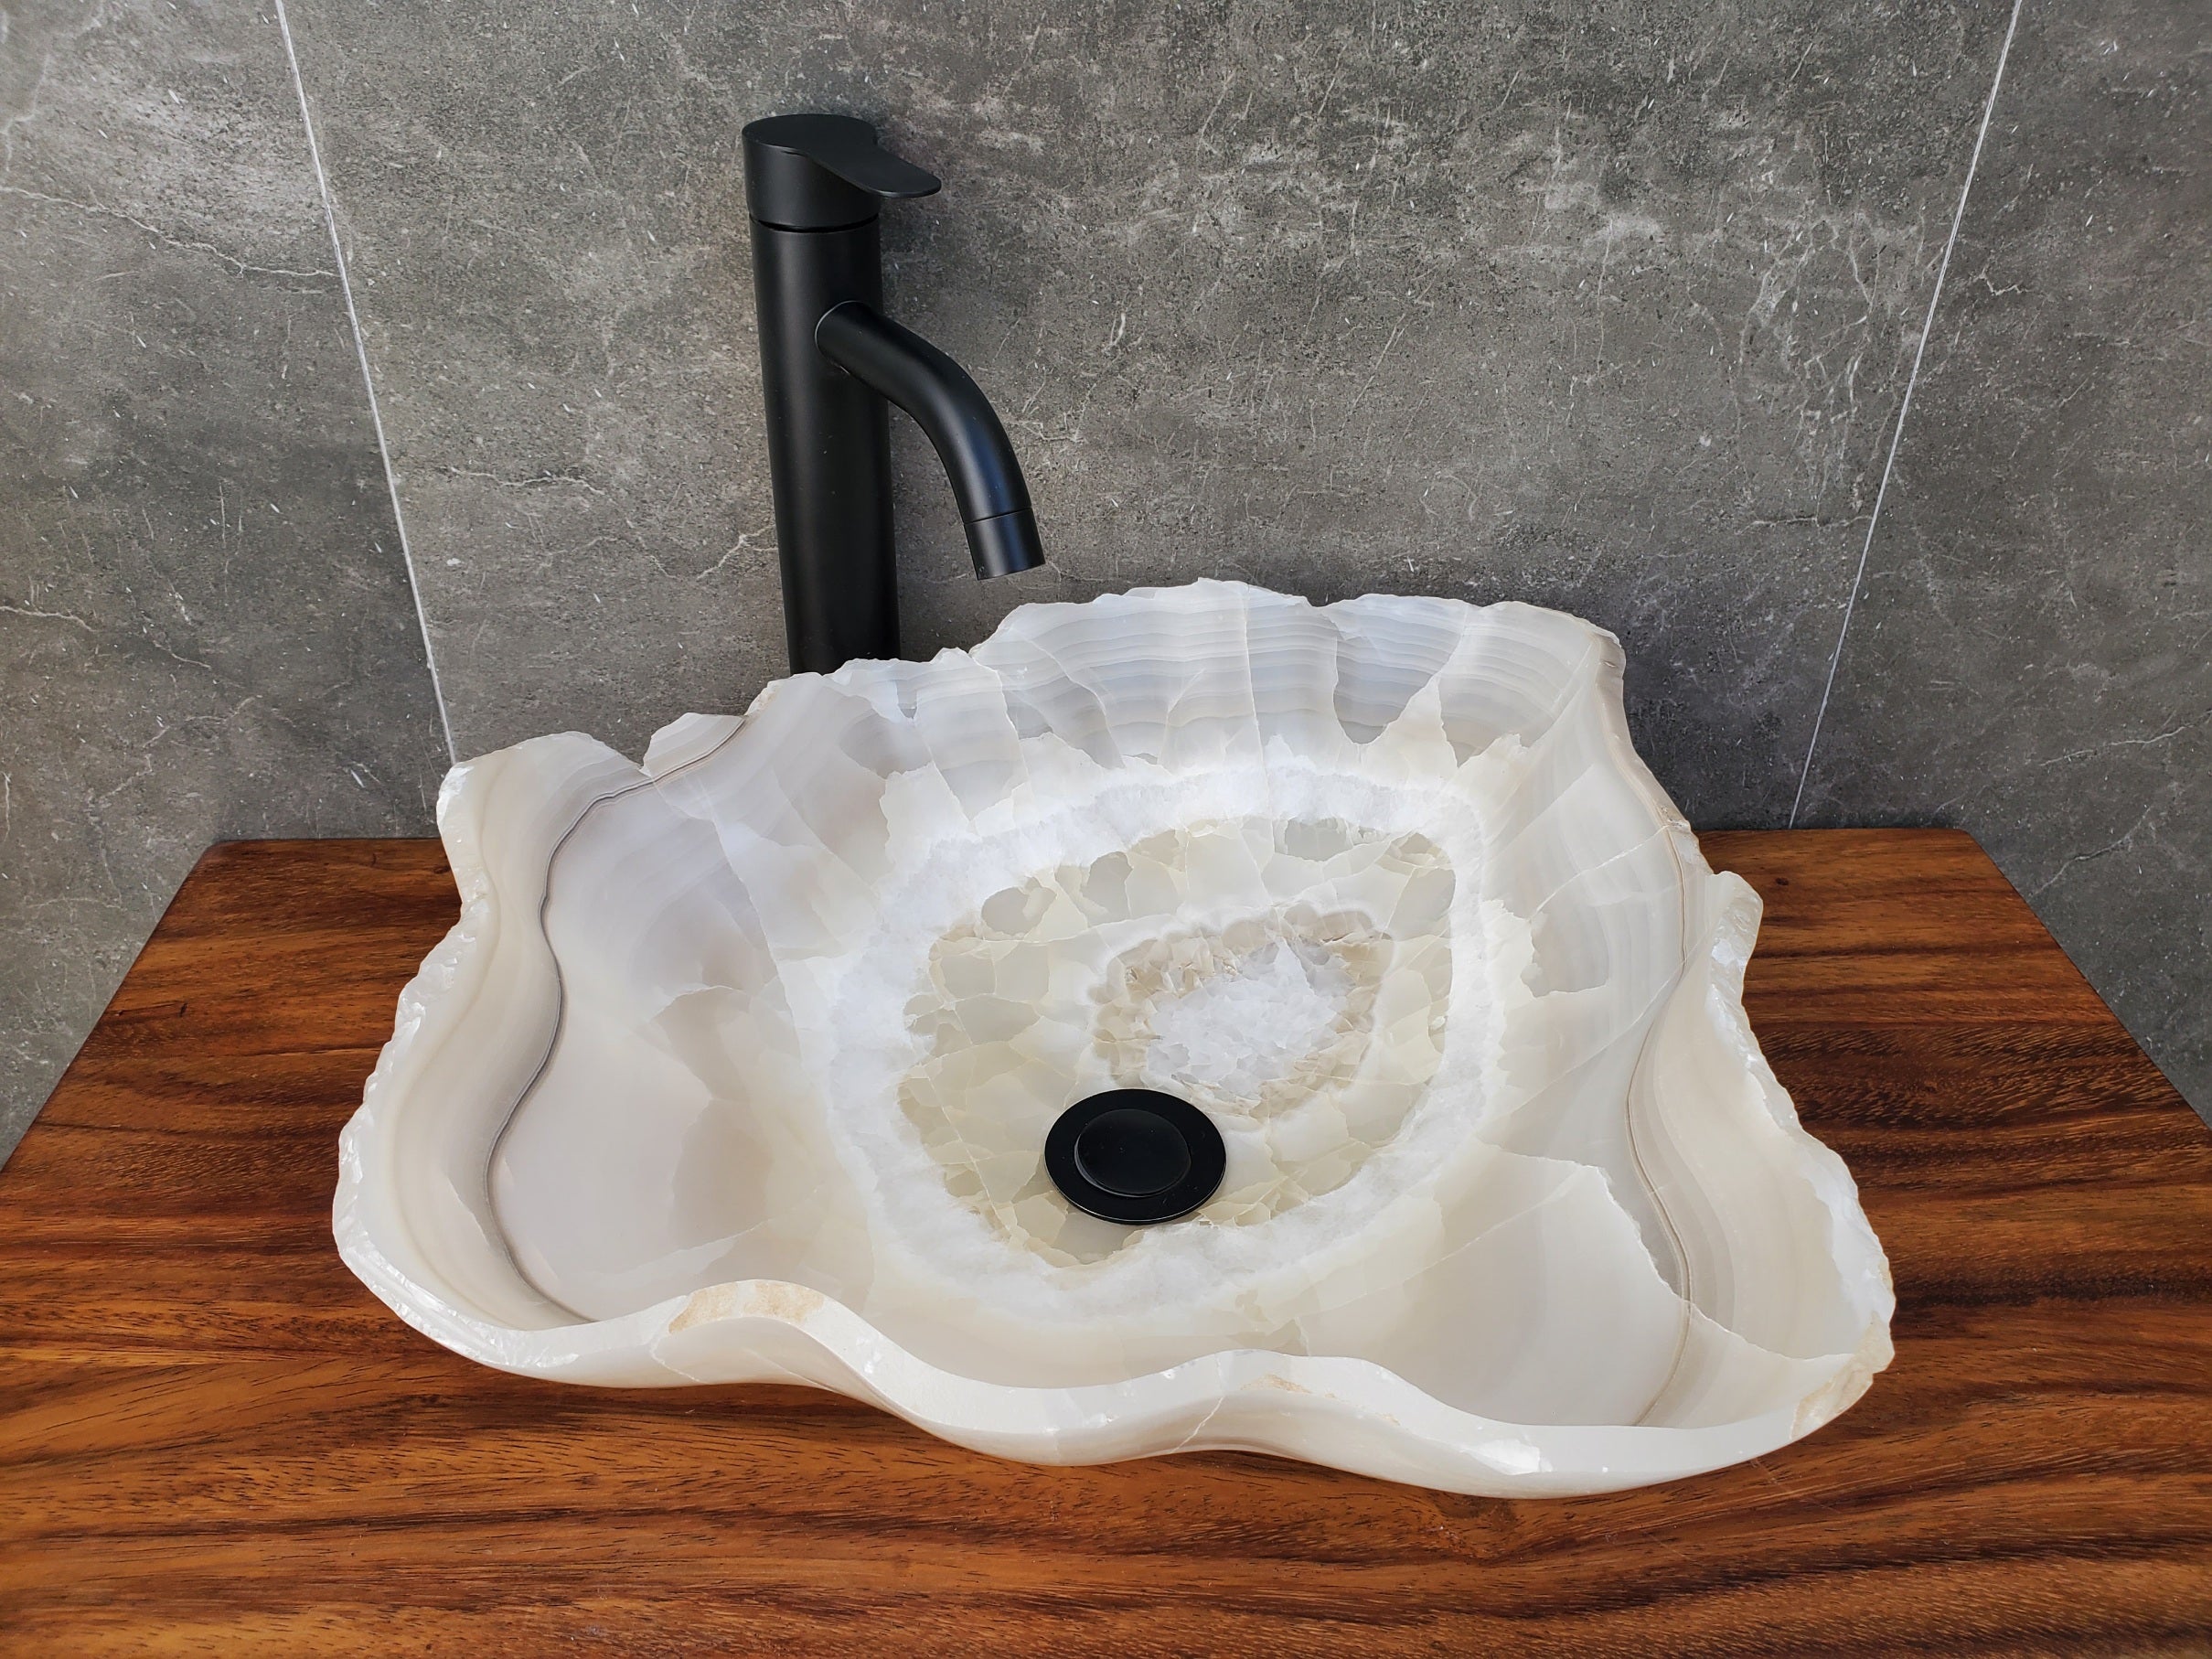 Transparent Onyx Stone Bathroom Vessel Sink. Epoxy Sealant is available Fast shipping. Standard drain size. A beautiful work of art. Handmade. Buy Now at www.felipeandgrace.com.